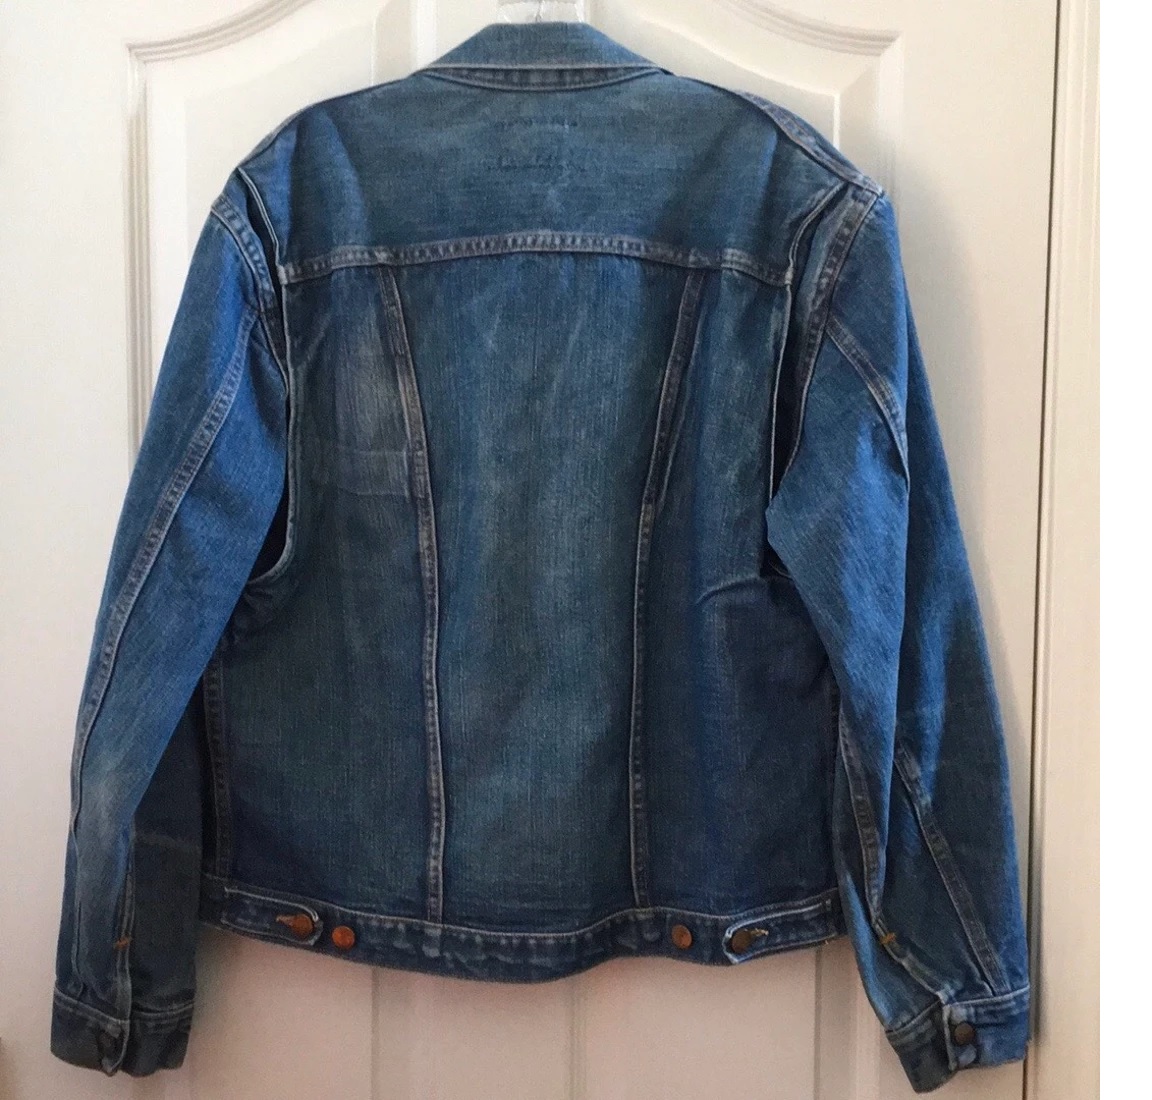 Wrangler Vintage Denim Jacket ID & Authenticate | The Fedora Lounge